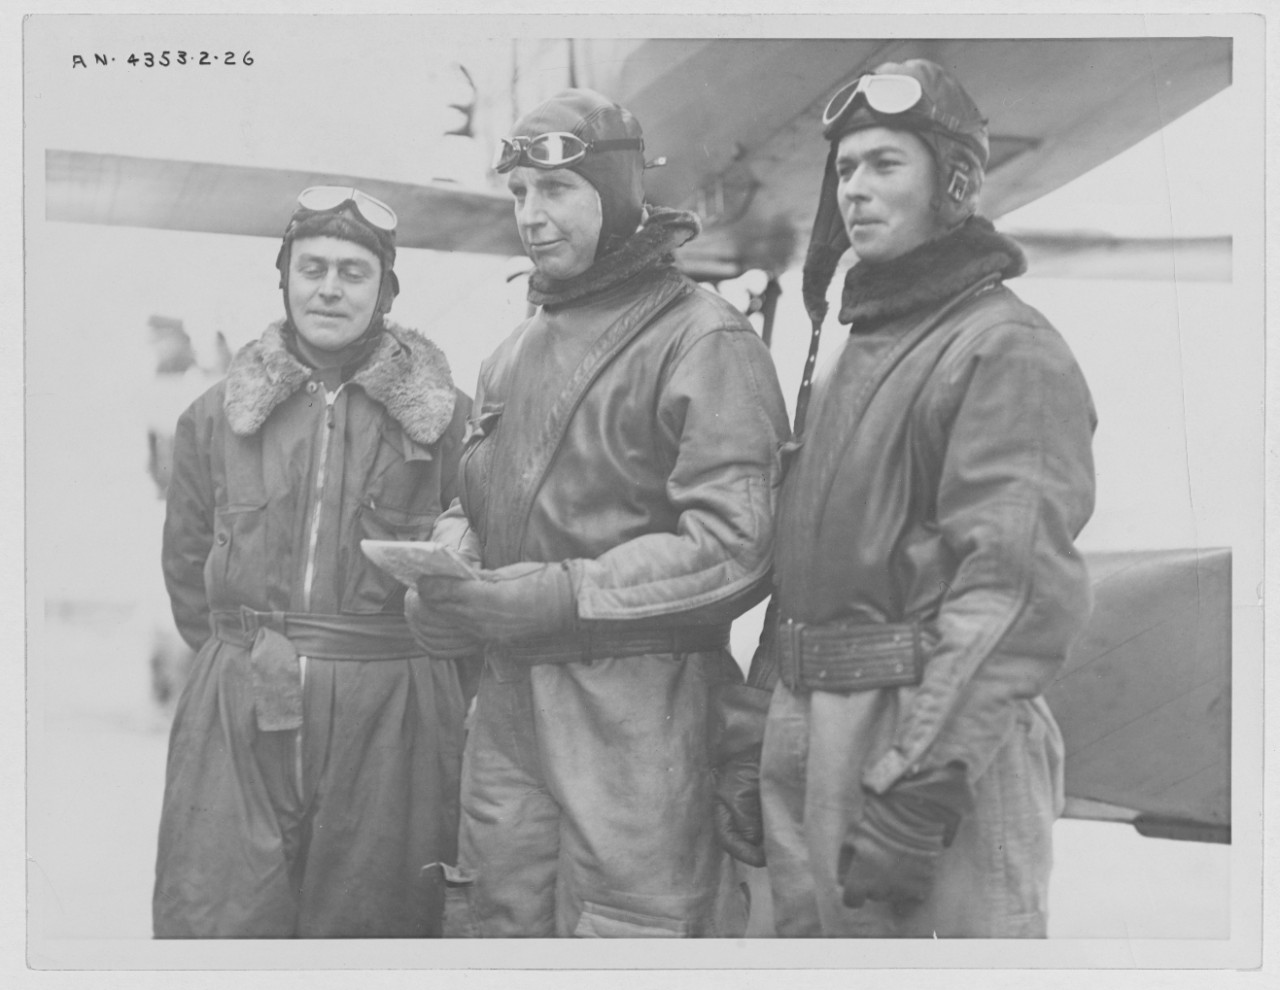 Left to right; Lieut. L. W. Curtain, Comdr, John Rodgers and H. J. Jones, Aviation pilot